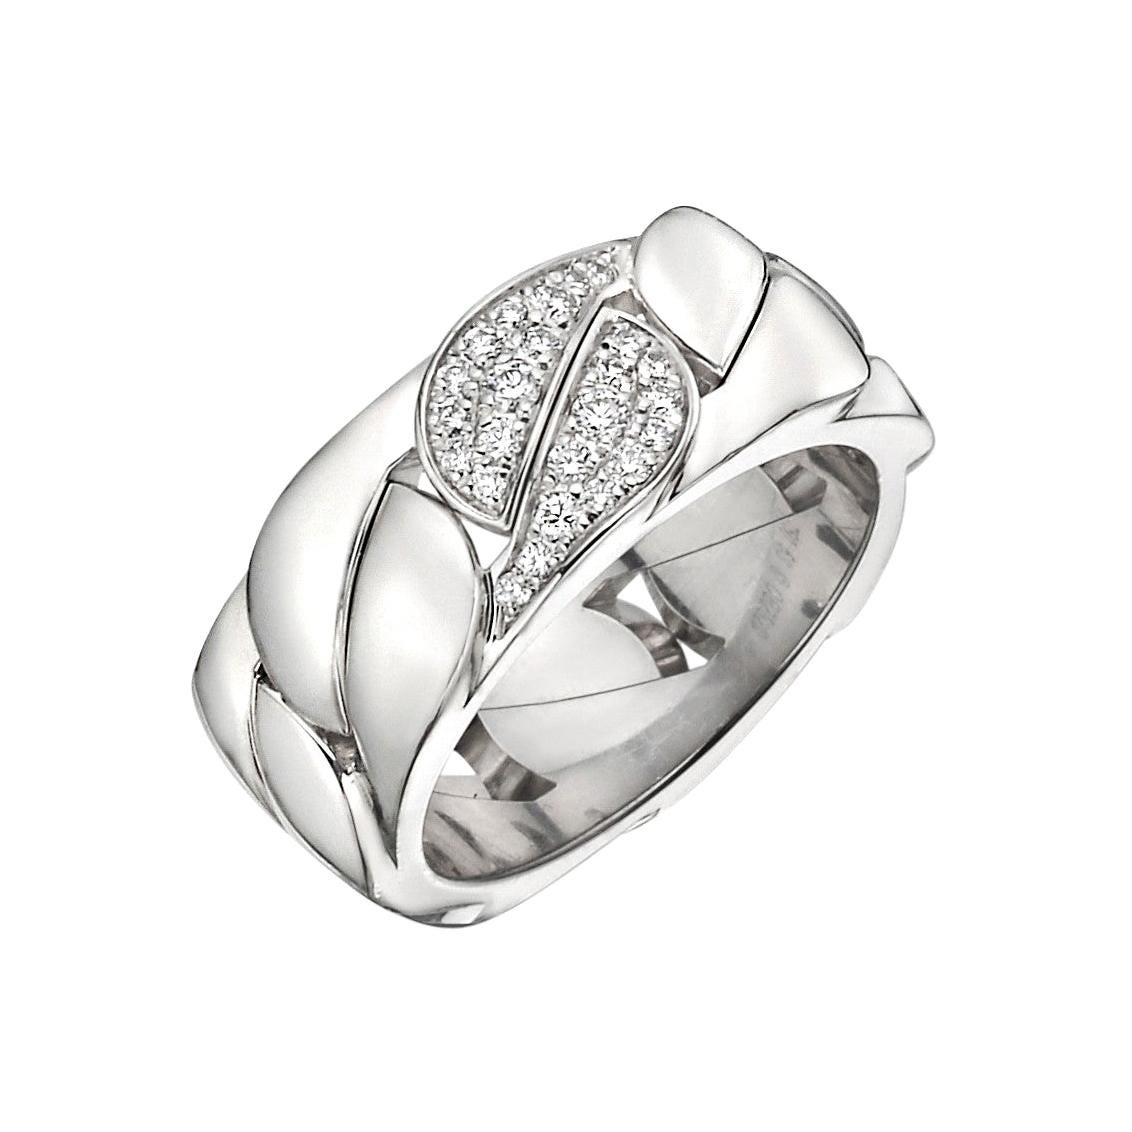 Cartier 18 Karat White Gold and Diamond "La Dona" Band Ring